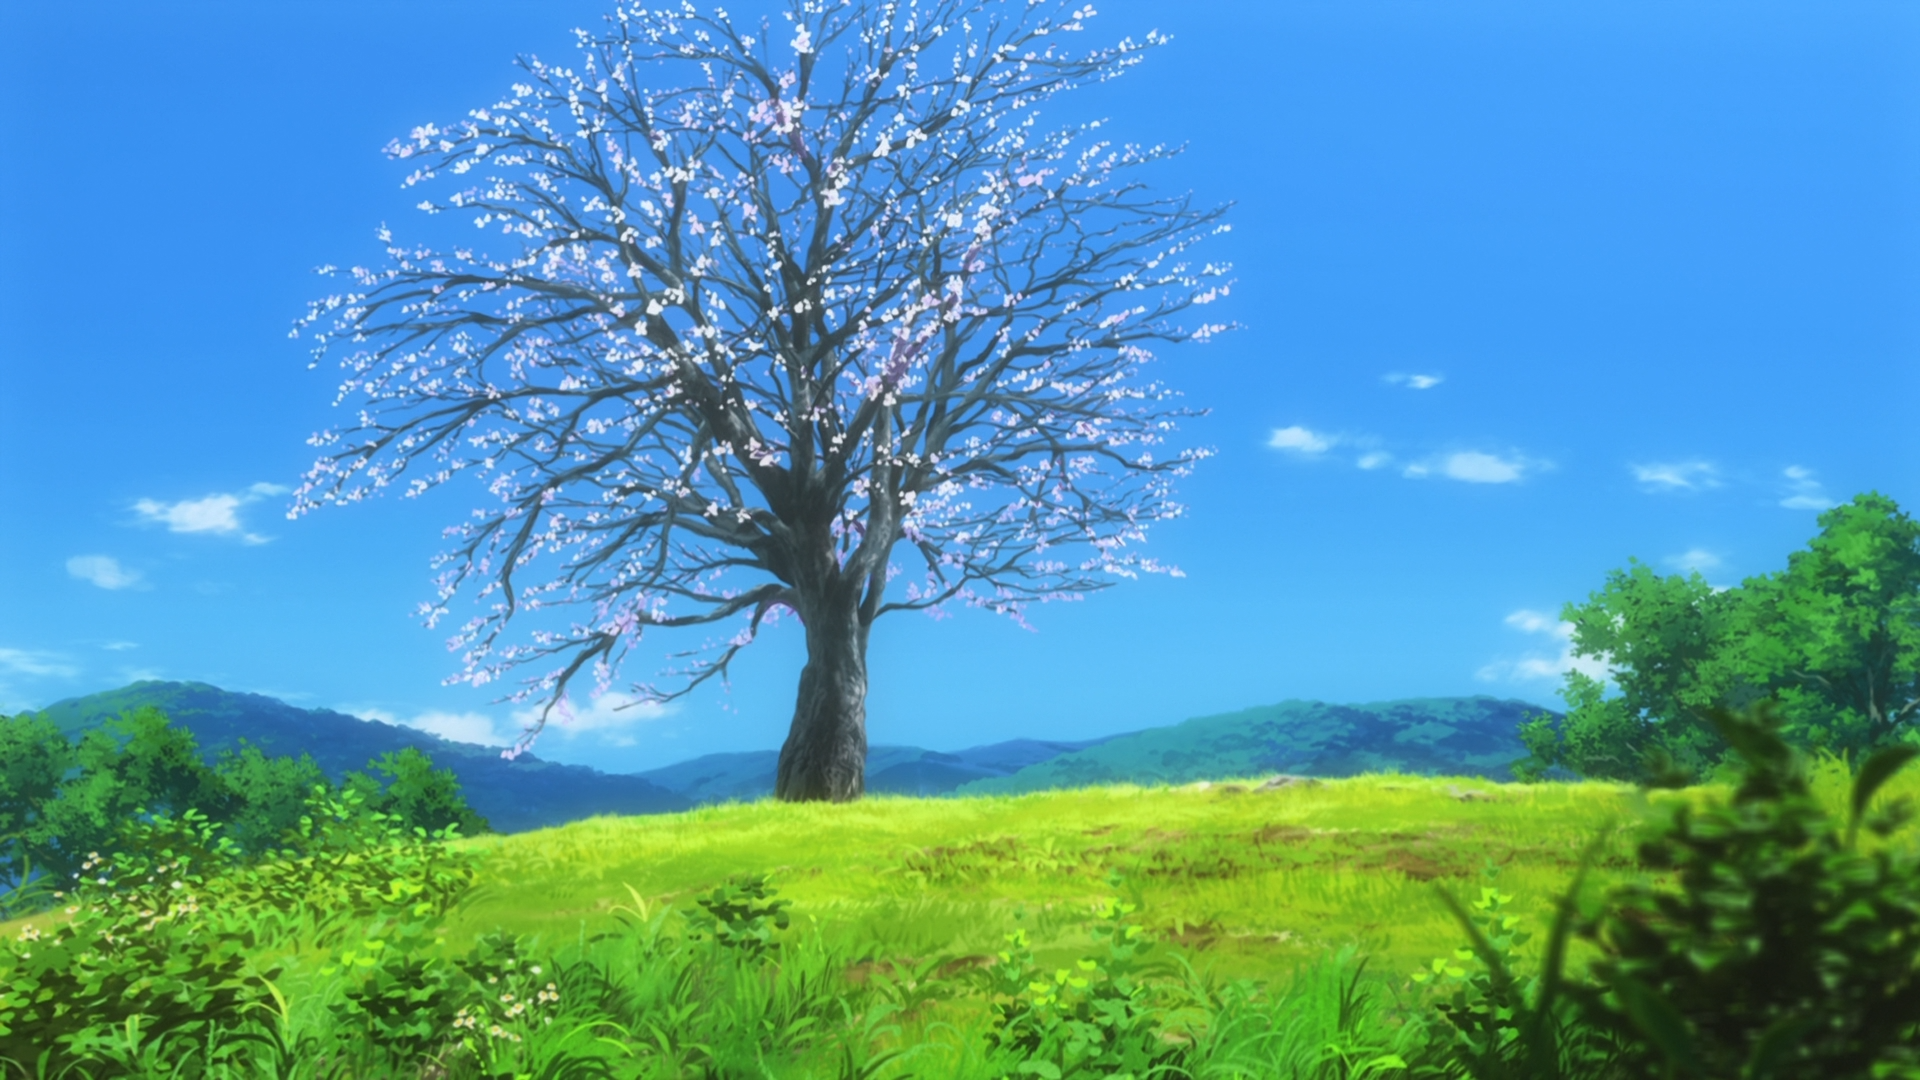 Anime 1920x1080 Non Non Biyori landscape trees sky clouds grass